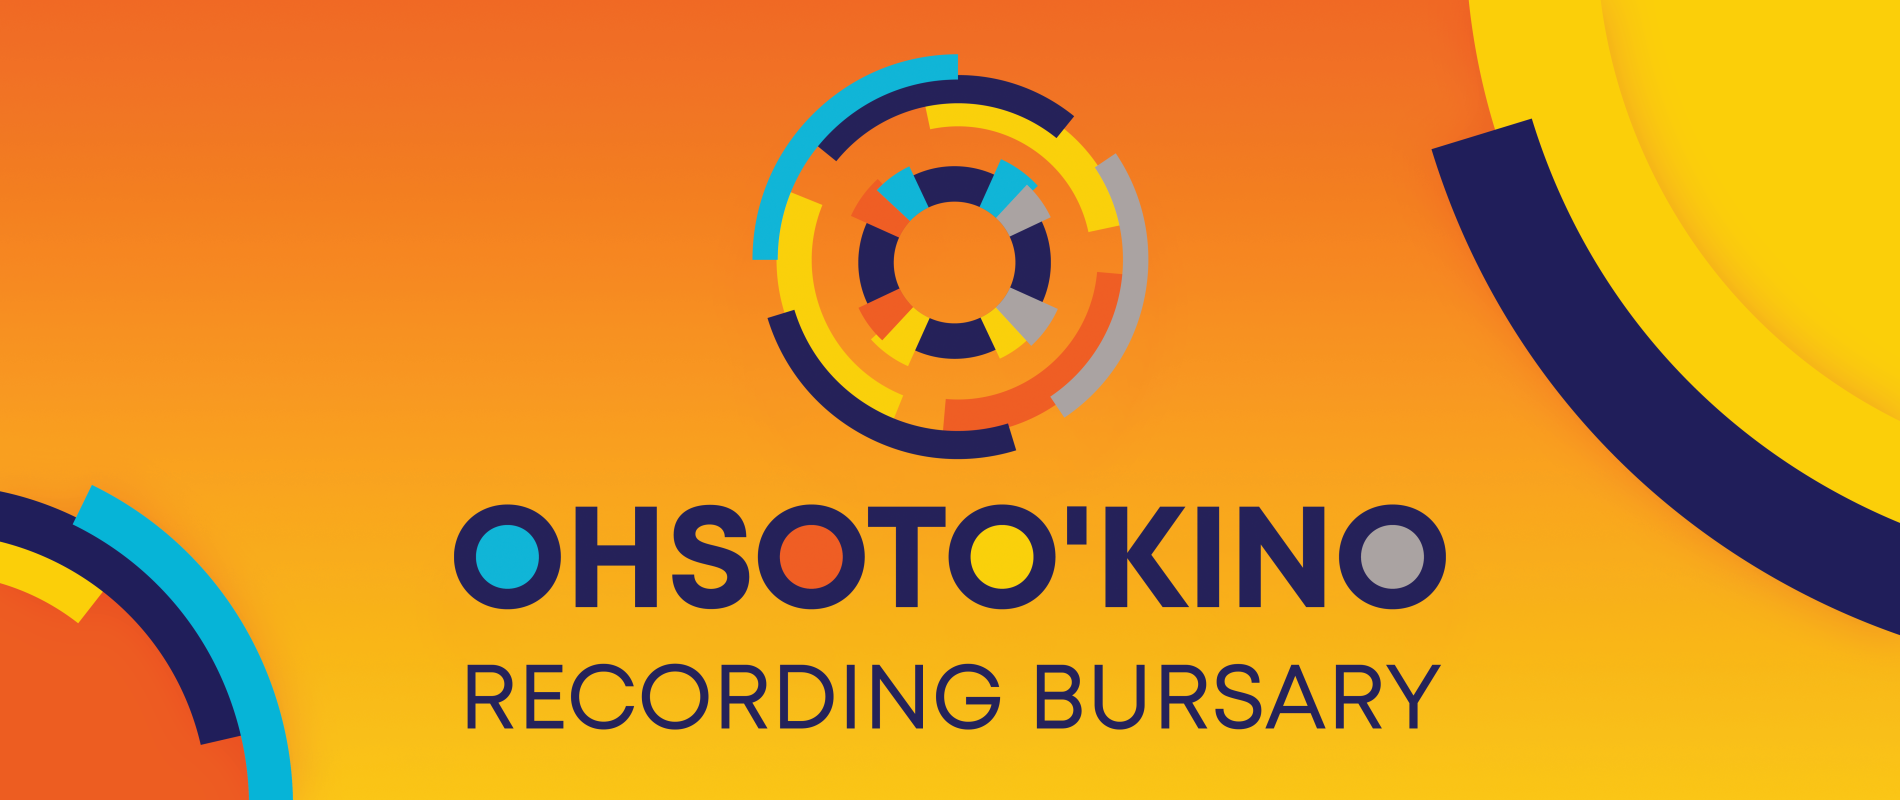 National Music Centre Announces Call for Applications for 2023 OHSOTO’KINO Recording Bursary